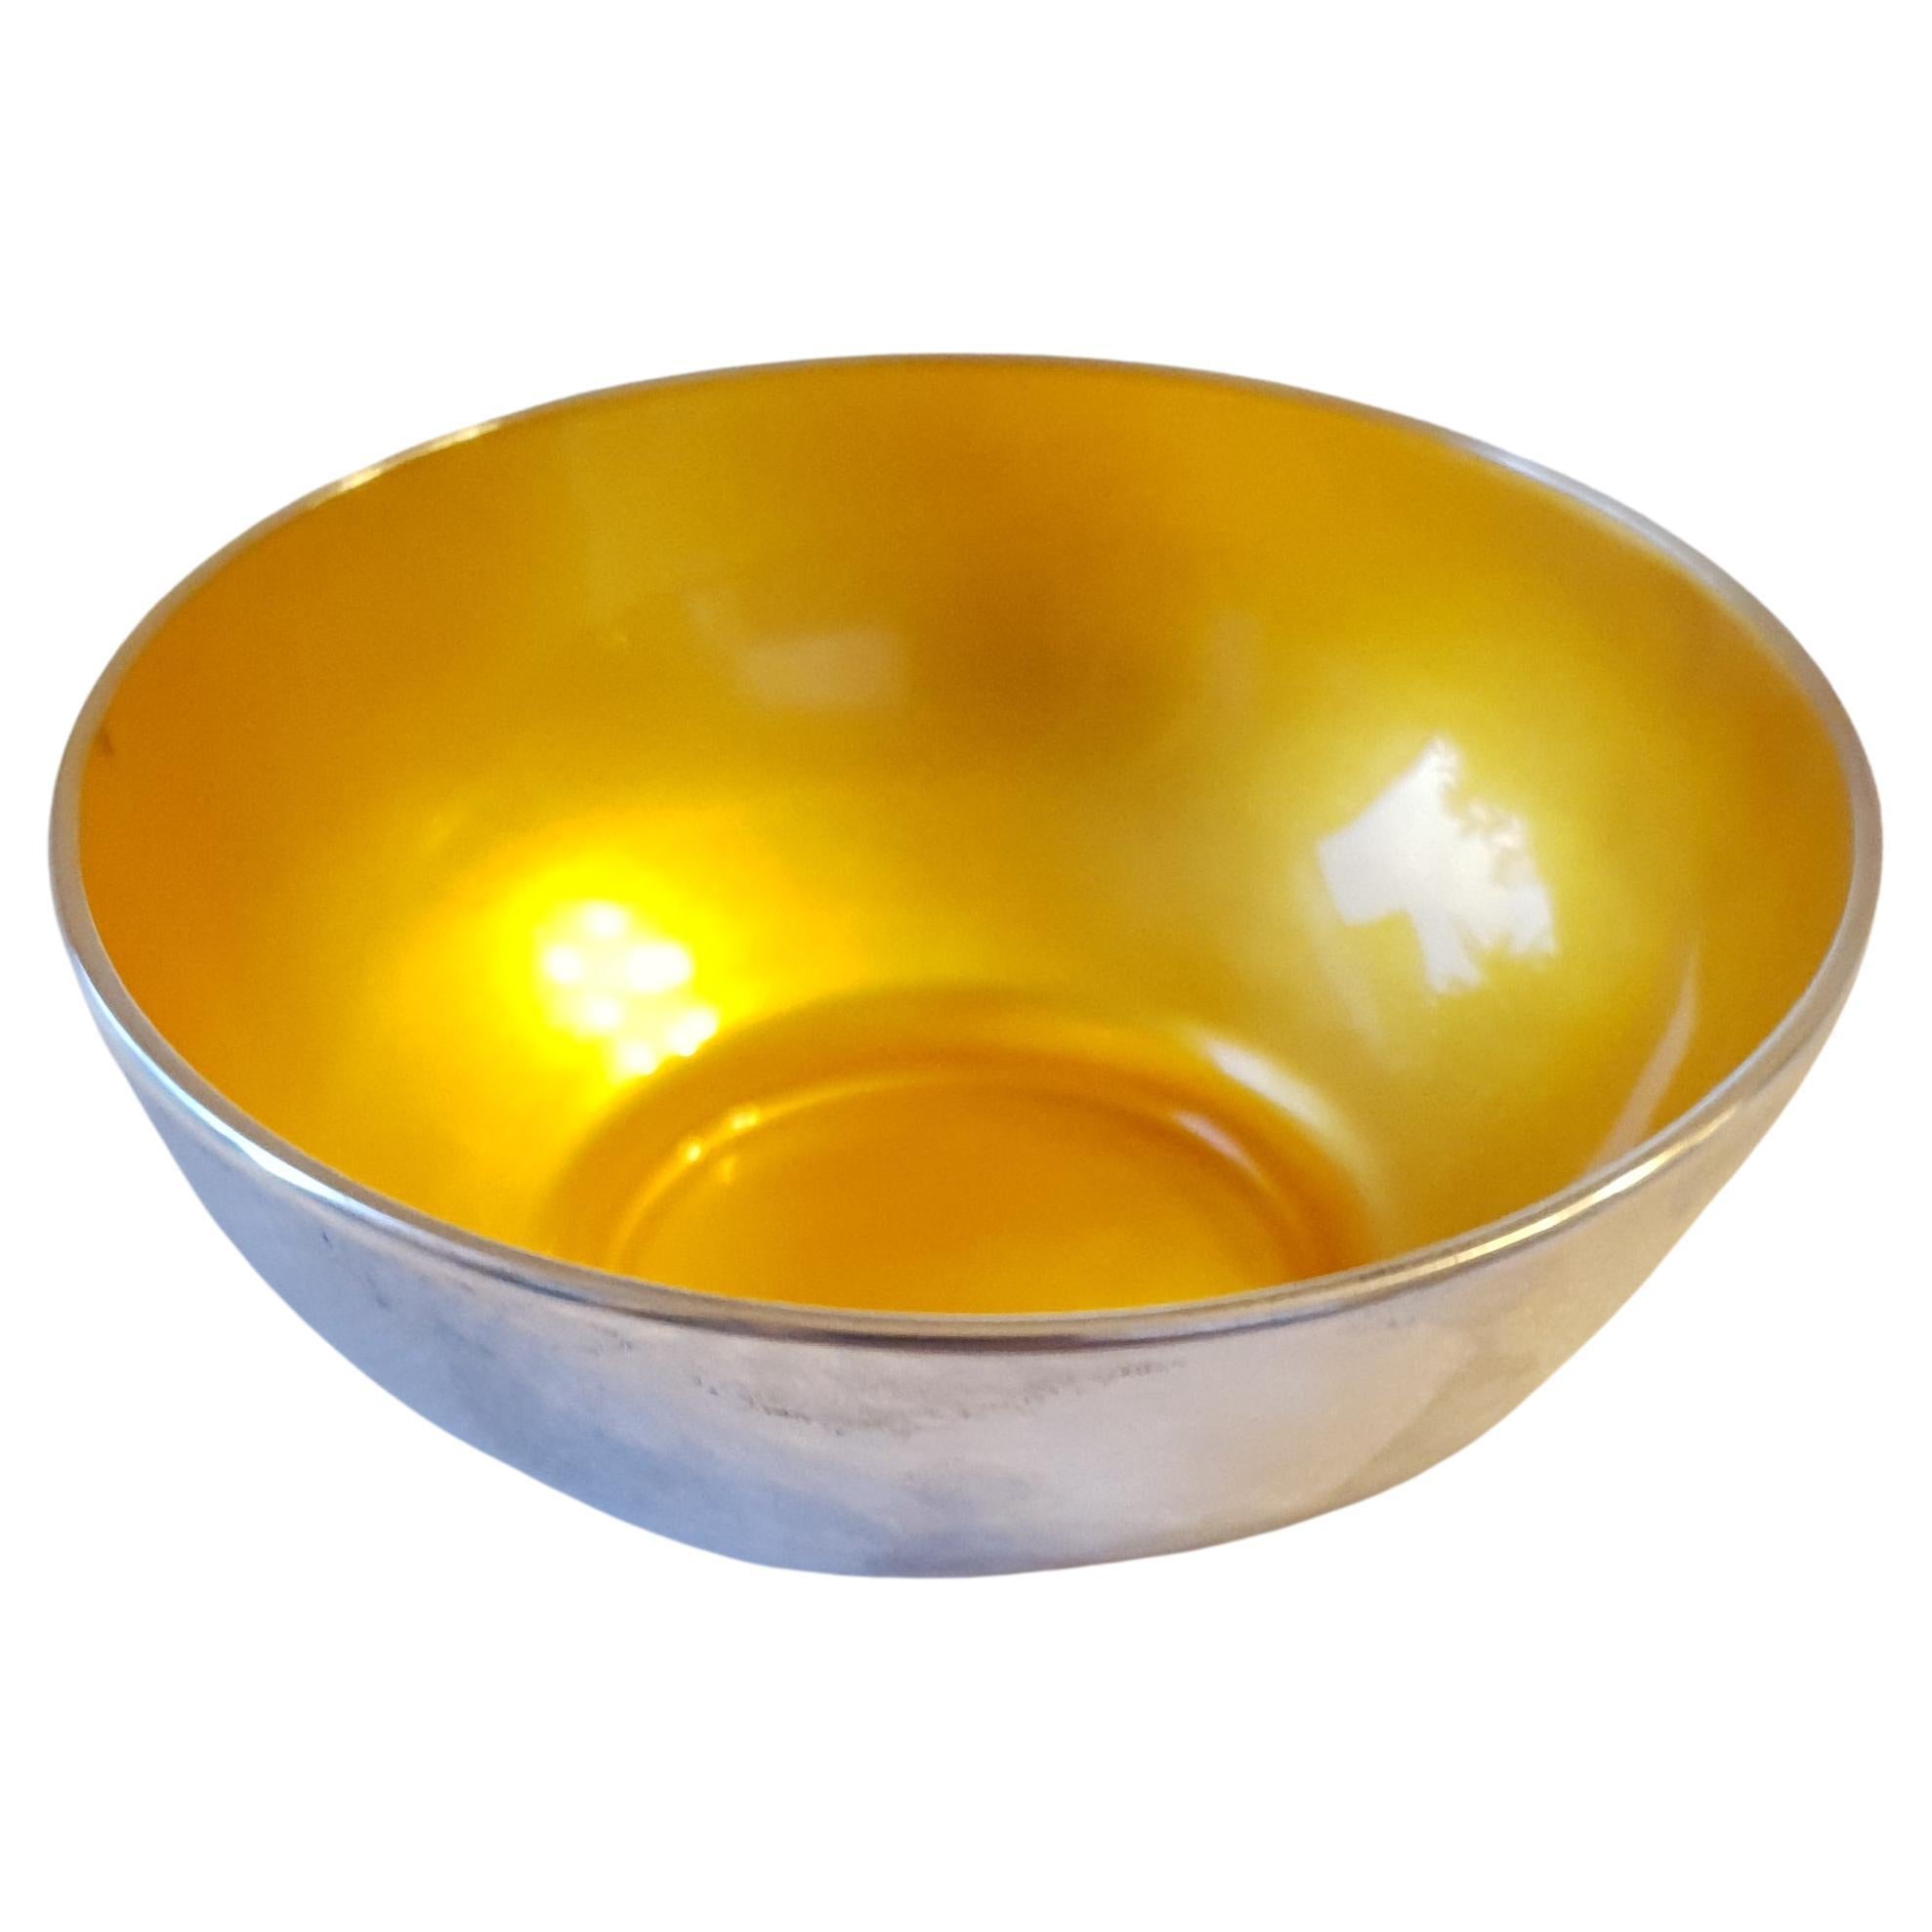 Anton Michelsen Sterling Silver and Yellow Enamel bowl